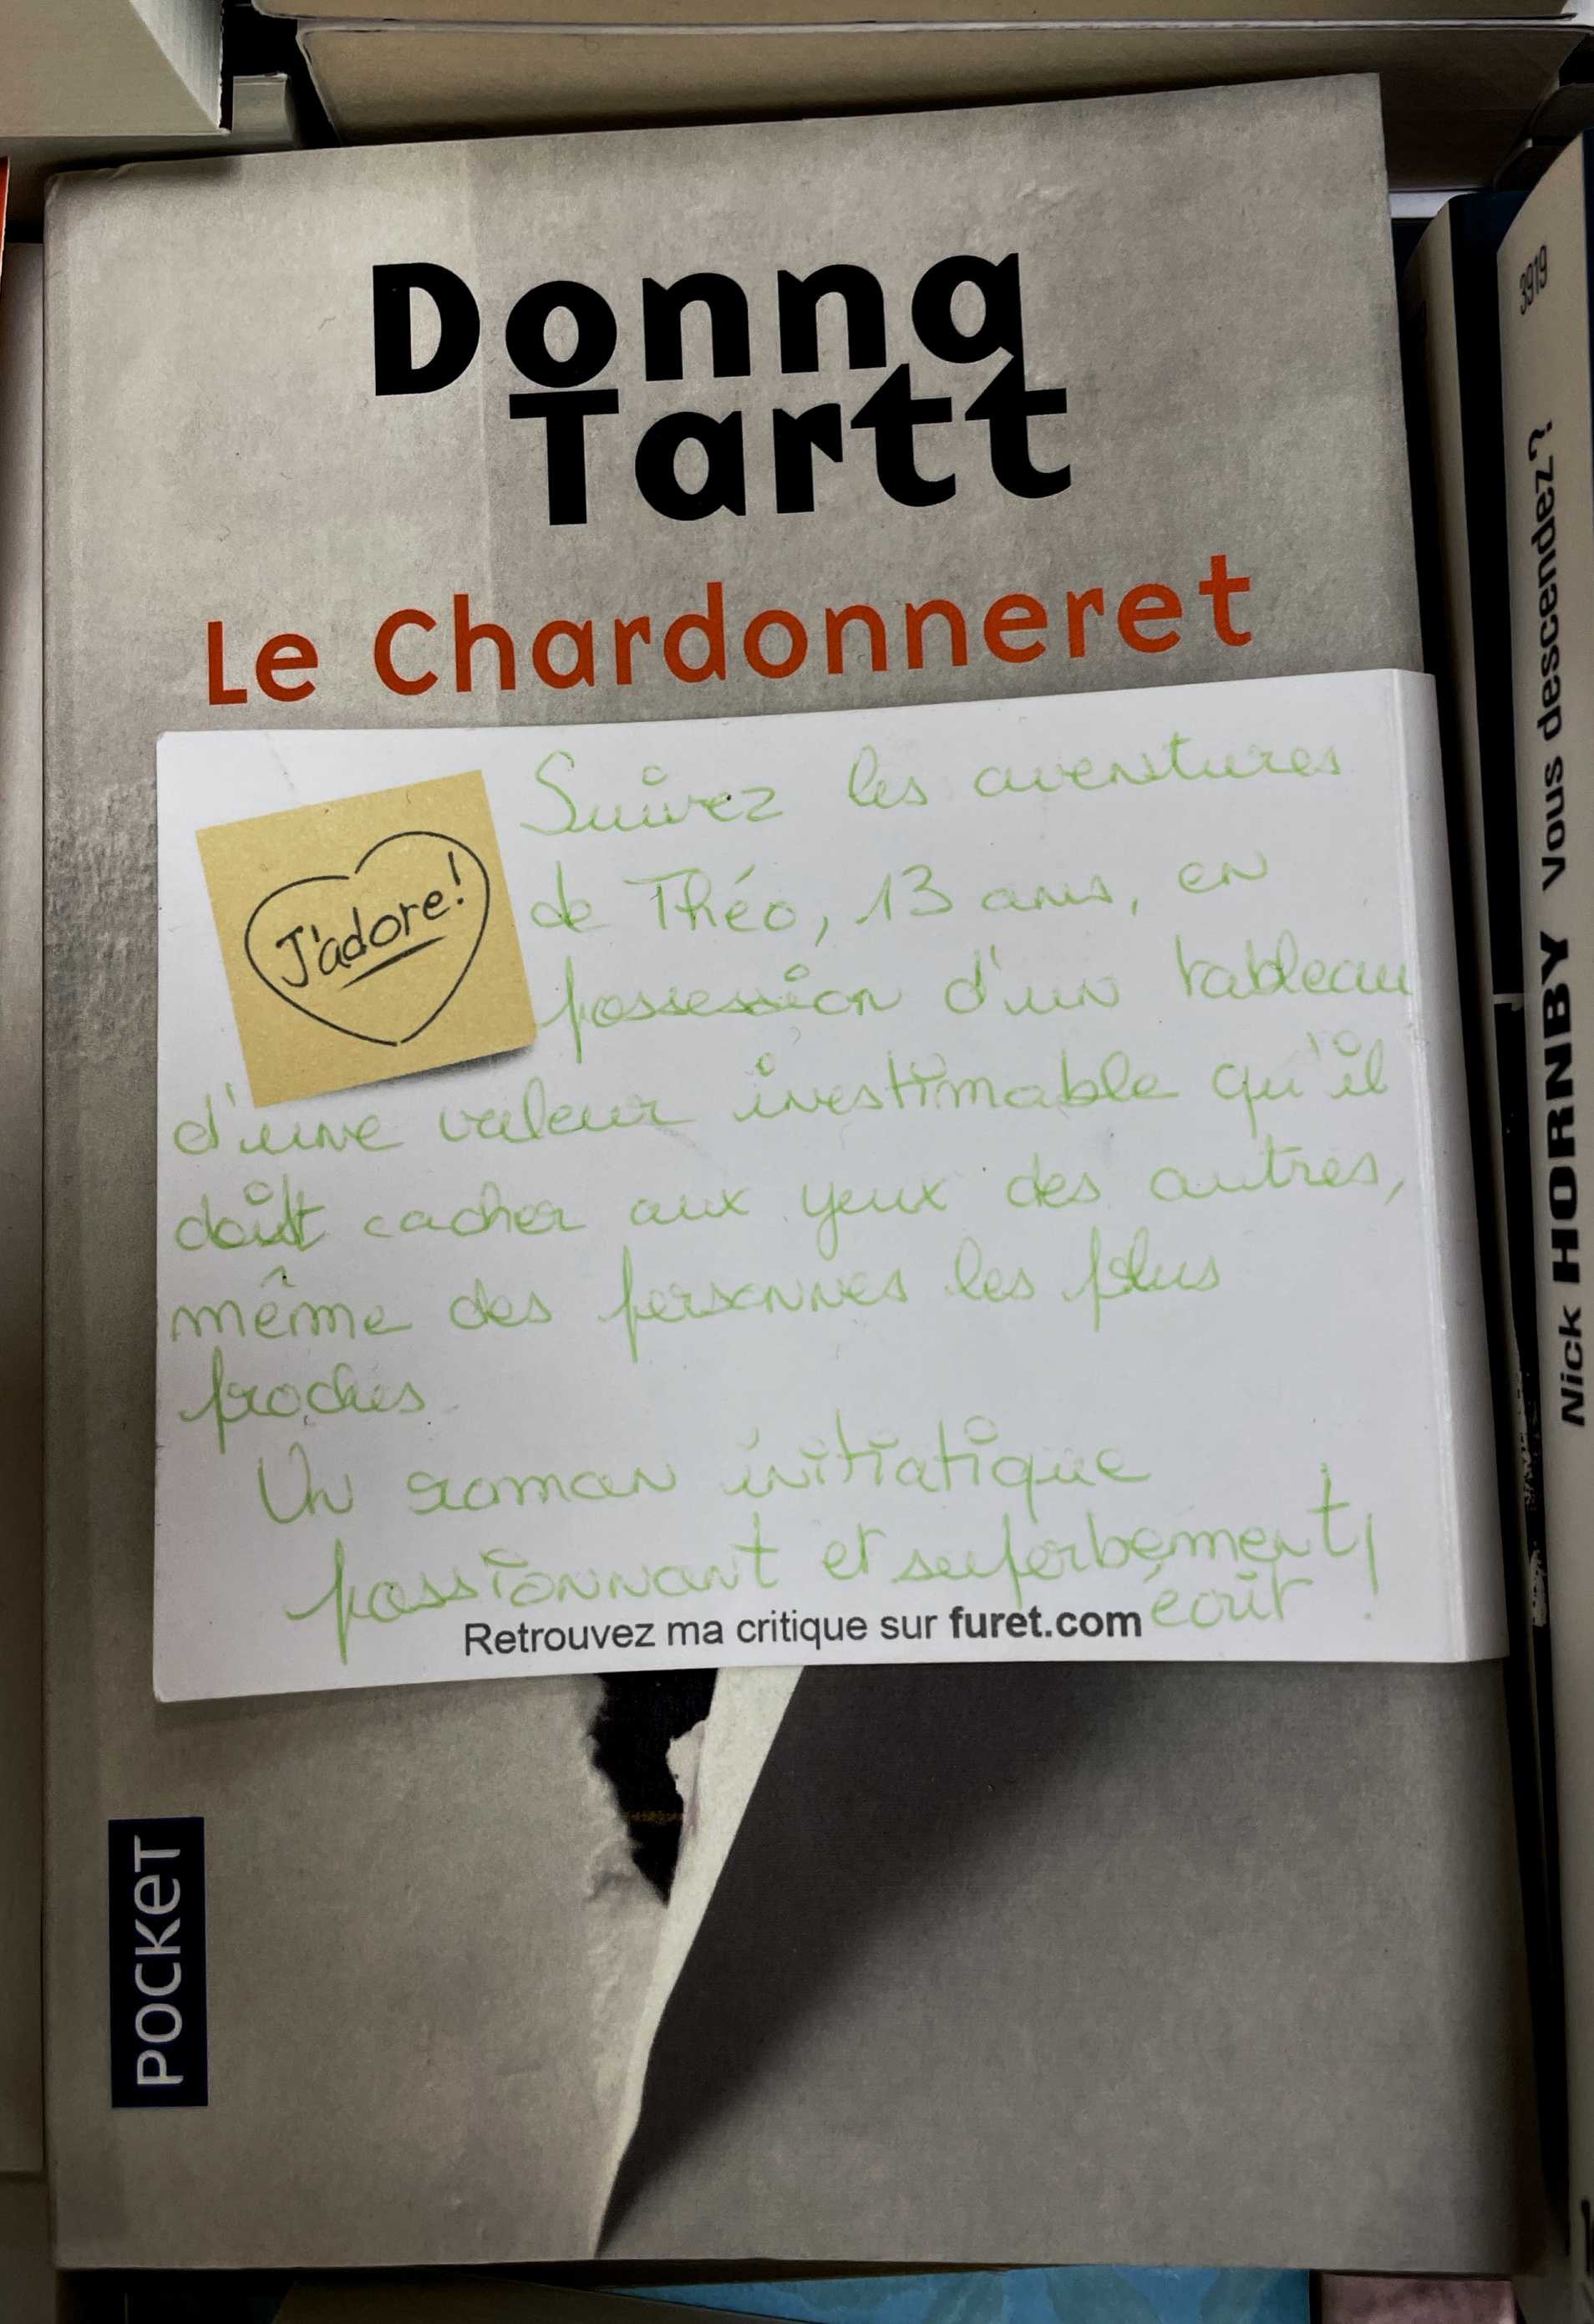 Le Chardonneret / Donna Tartt